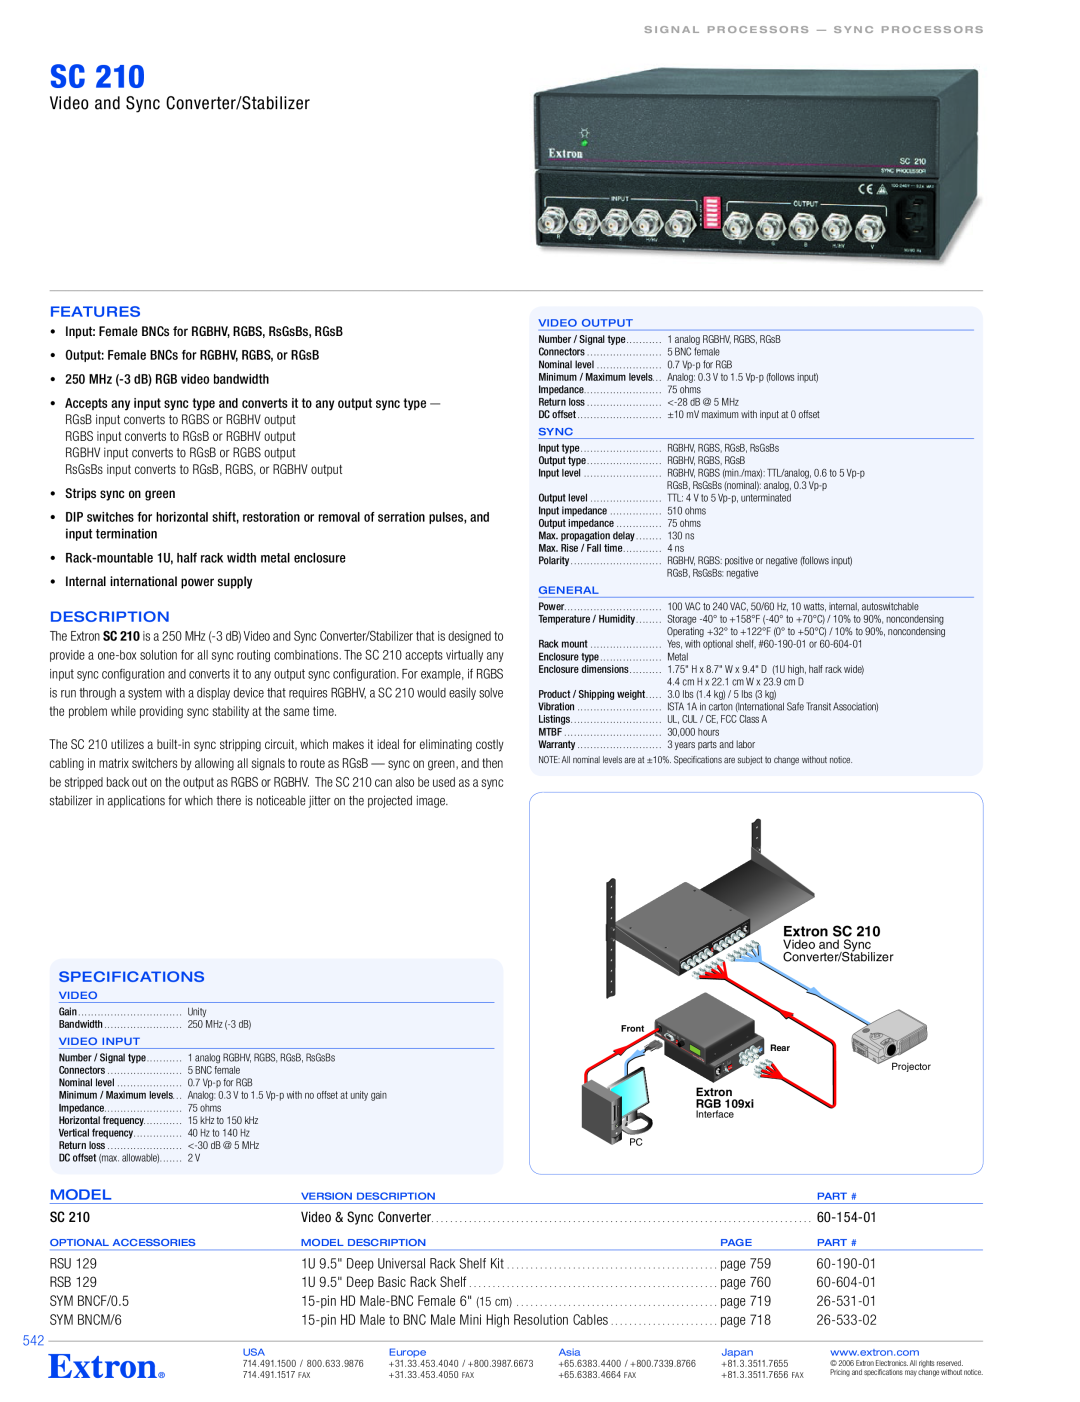 Extron electronic SC 210 specifications Video and Sync Converter/Stabilizer, Features, Description, Extron SC, Model, $900 